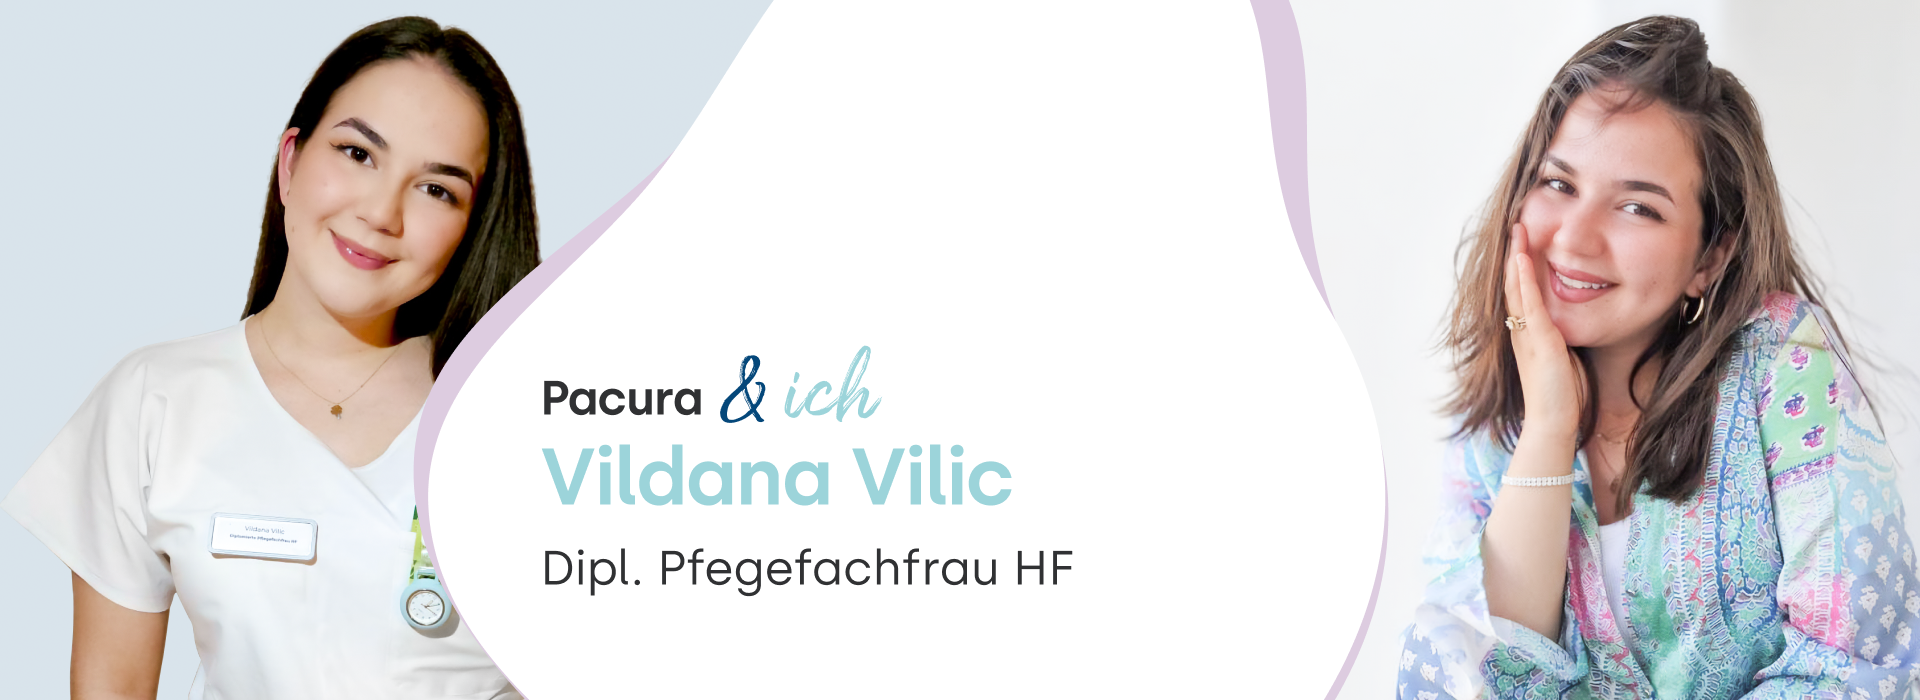 Vildana Vilic - Pacura&ich